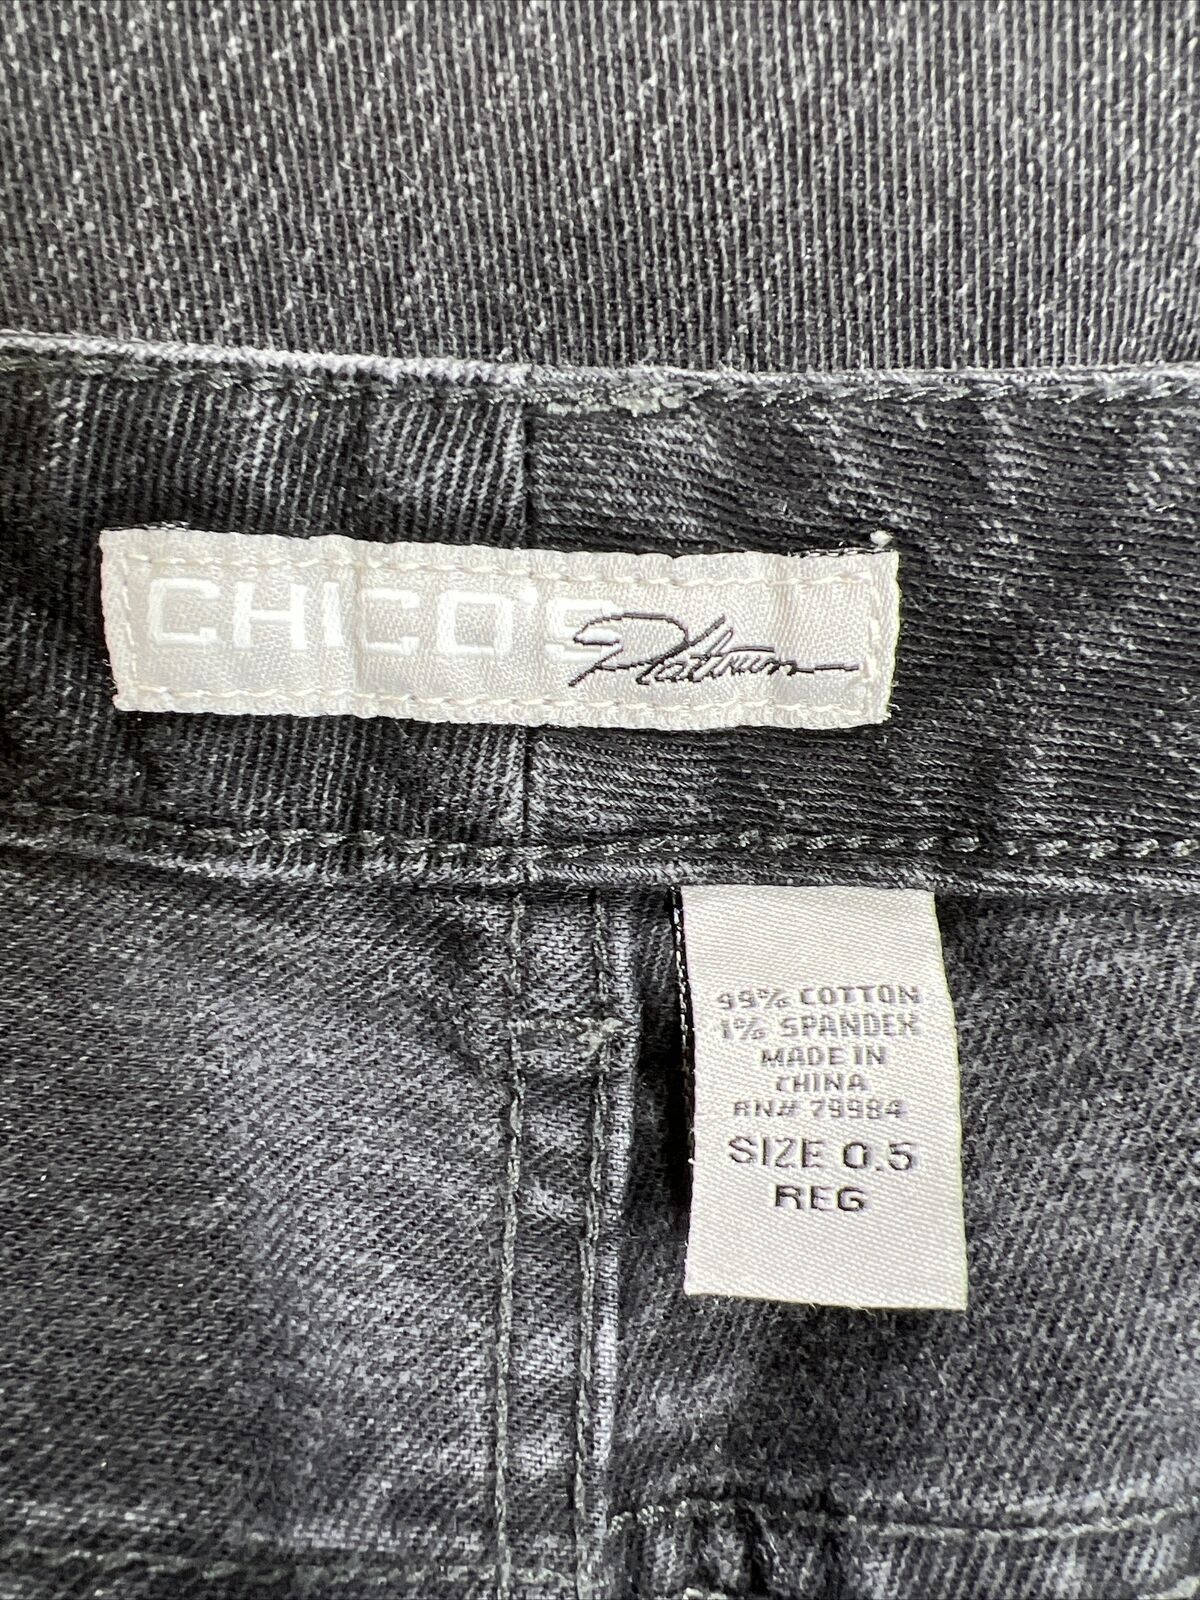 Chico's Women's Platinum Black Stretch Denim Slim Tapered Jeans - 0.5/6